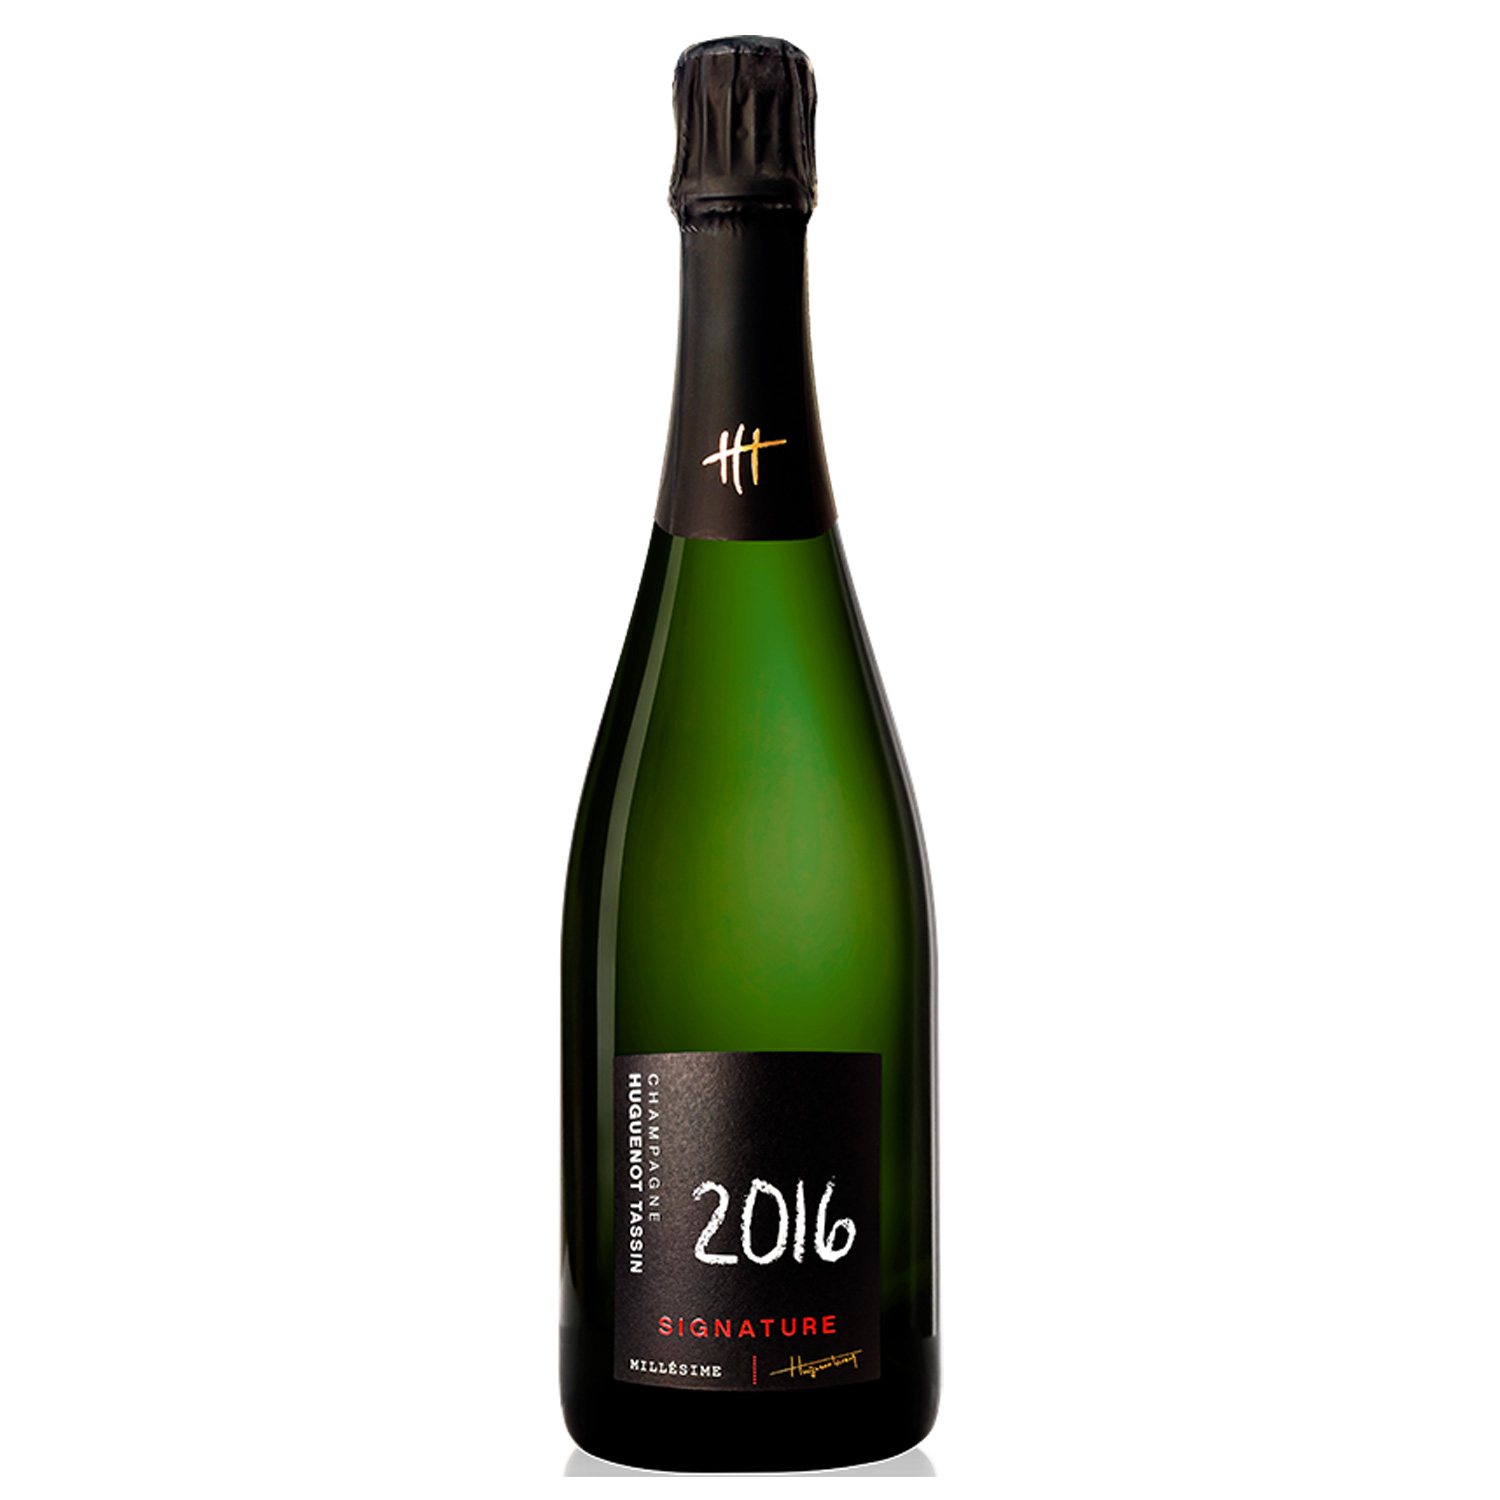 Champagne Huguenot-Tassin: Signature Millésime 2016